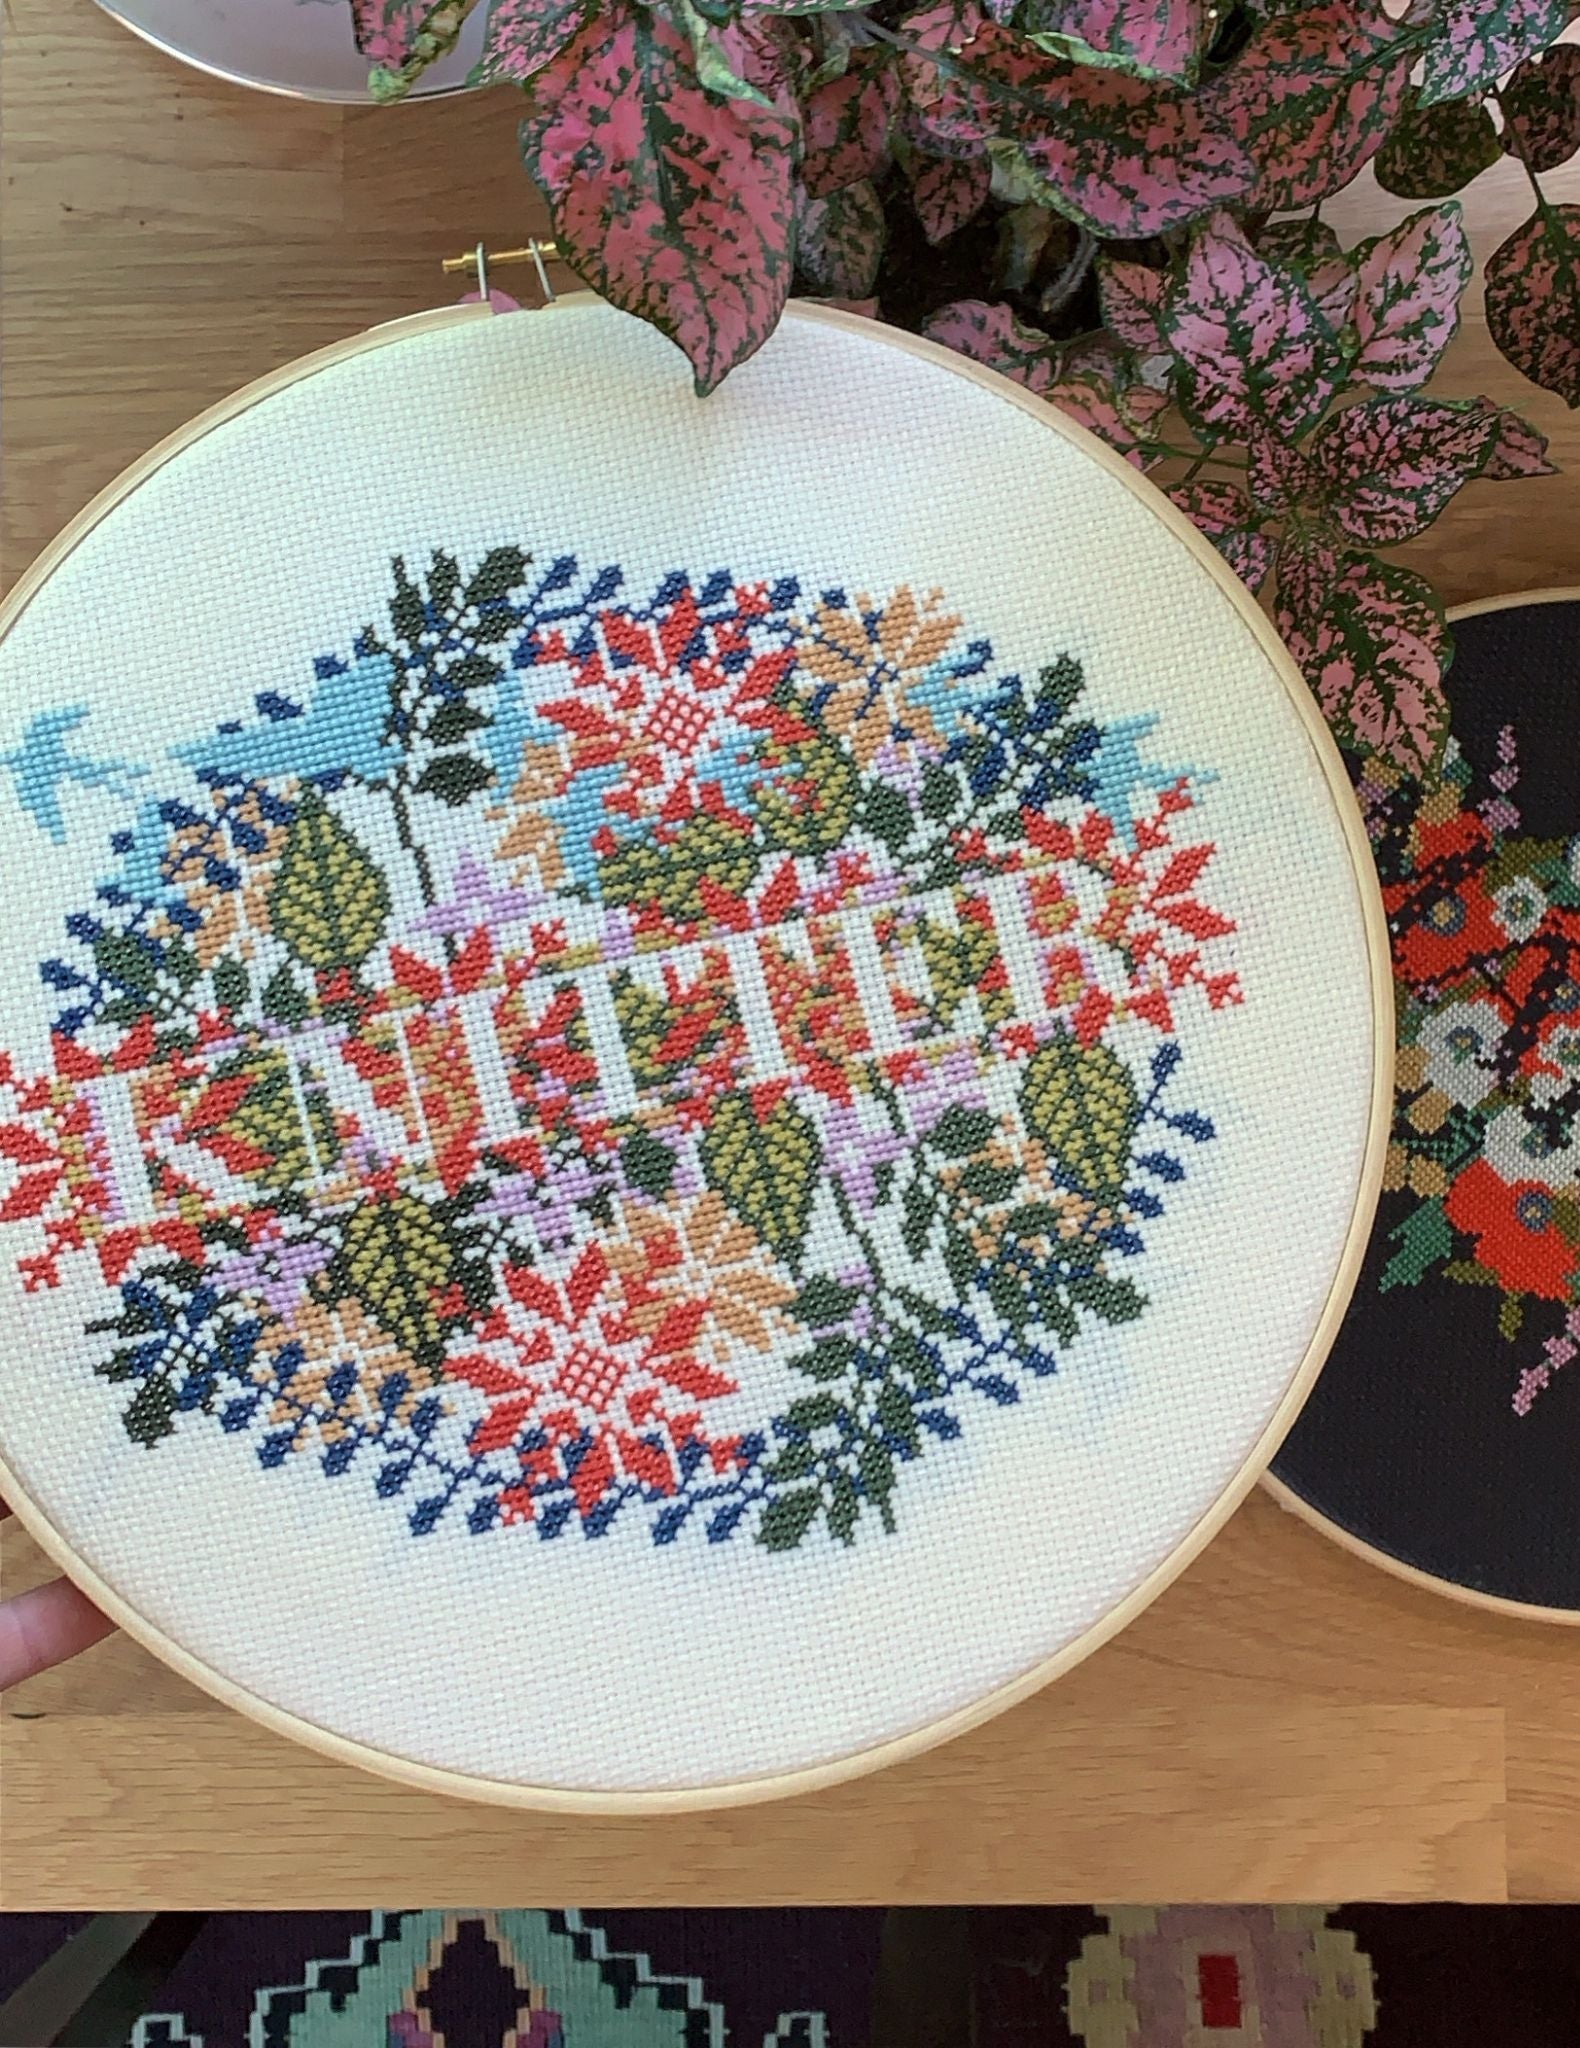 Is Cross Stitch Art? Or Craft?